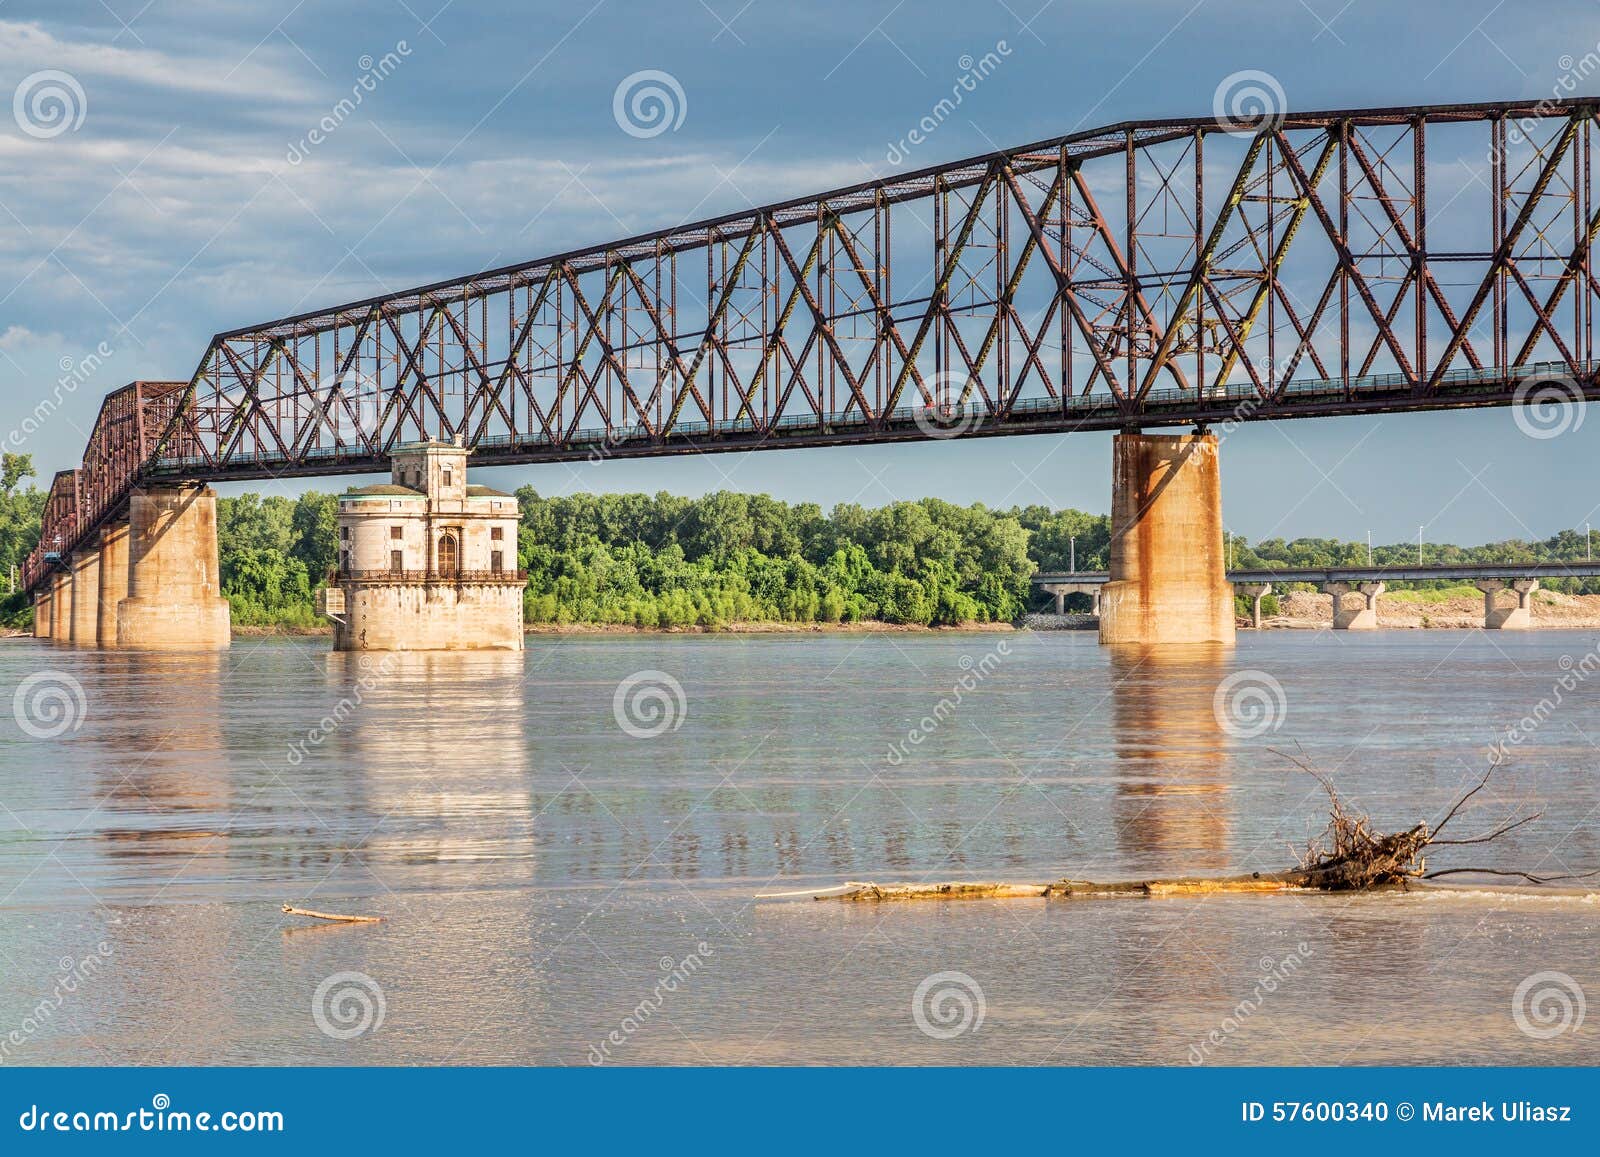 Река навести. Миссисипи река мост. Мост чейн оф Рокс. Мост Олд чейн оф Рокс. Первый Железнодорожный мост реки Миссисипи.